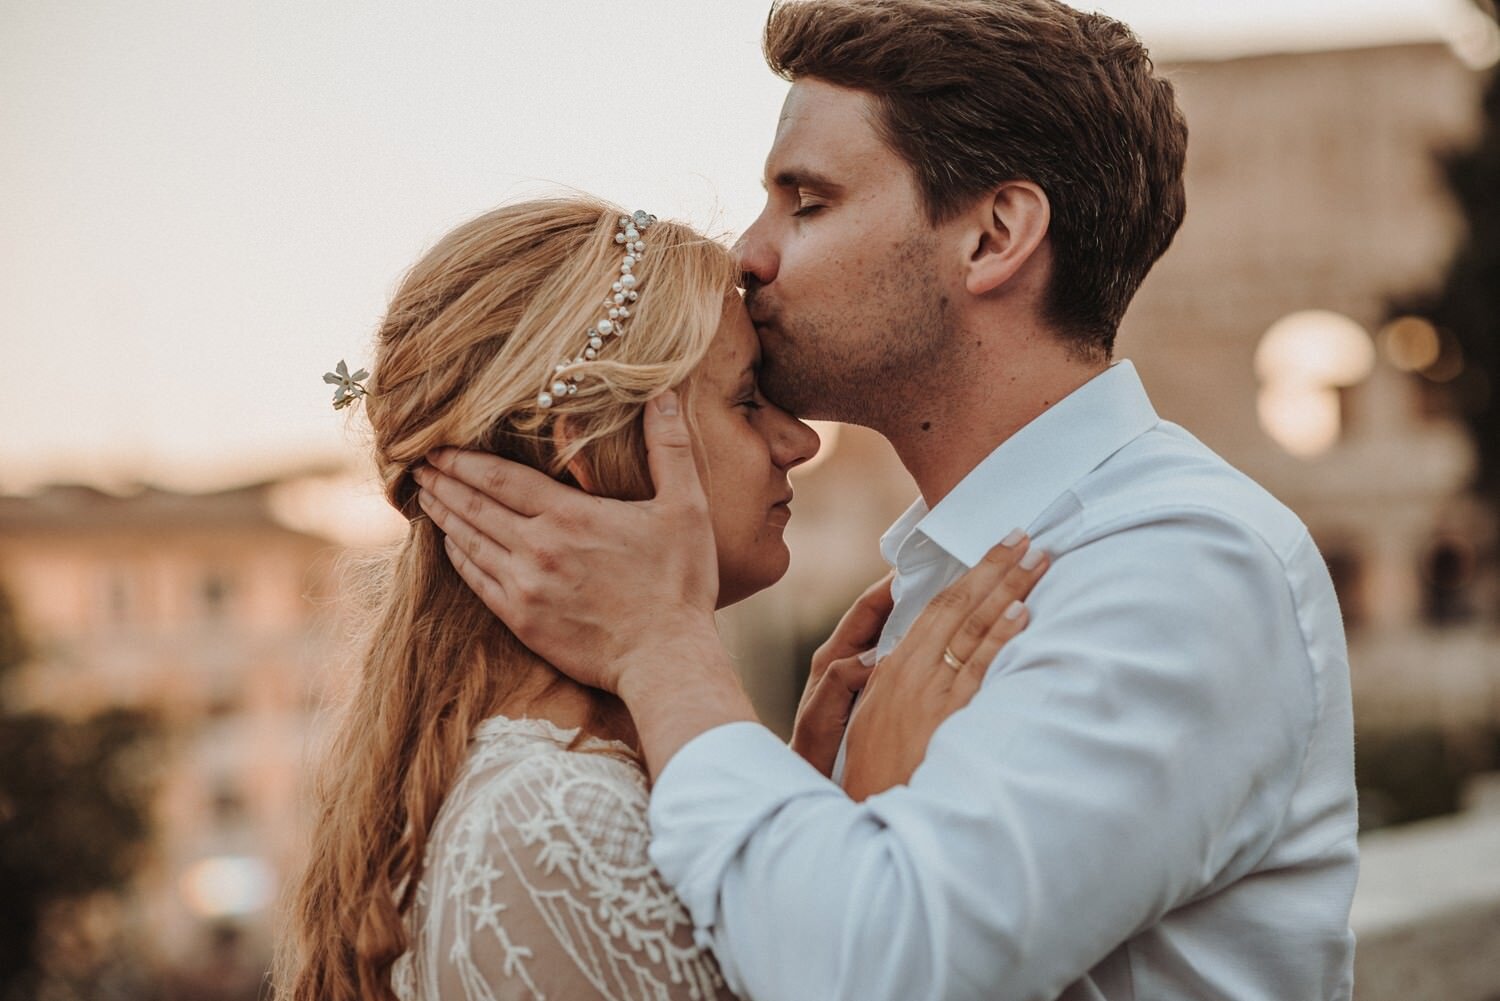 wayuphighelopements-elopement-rome-italy-itlianelopementphotographer-intimate-wedding (683).jpg